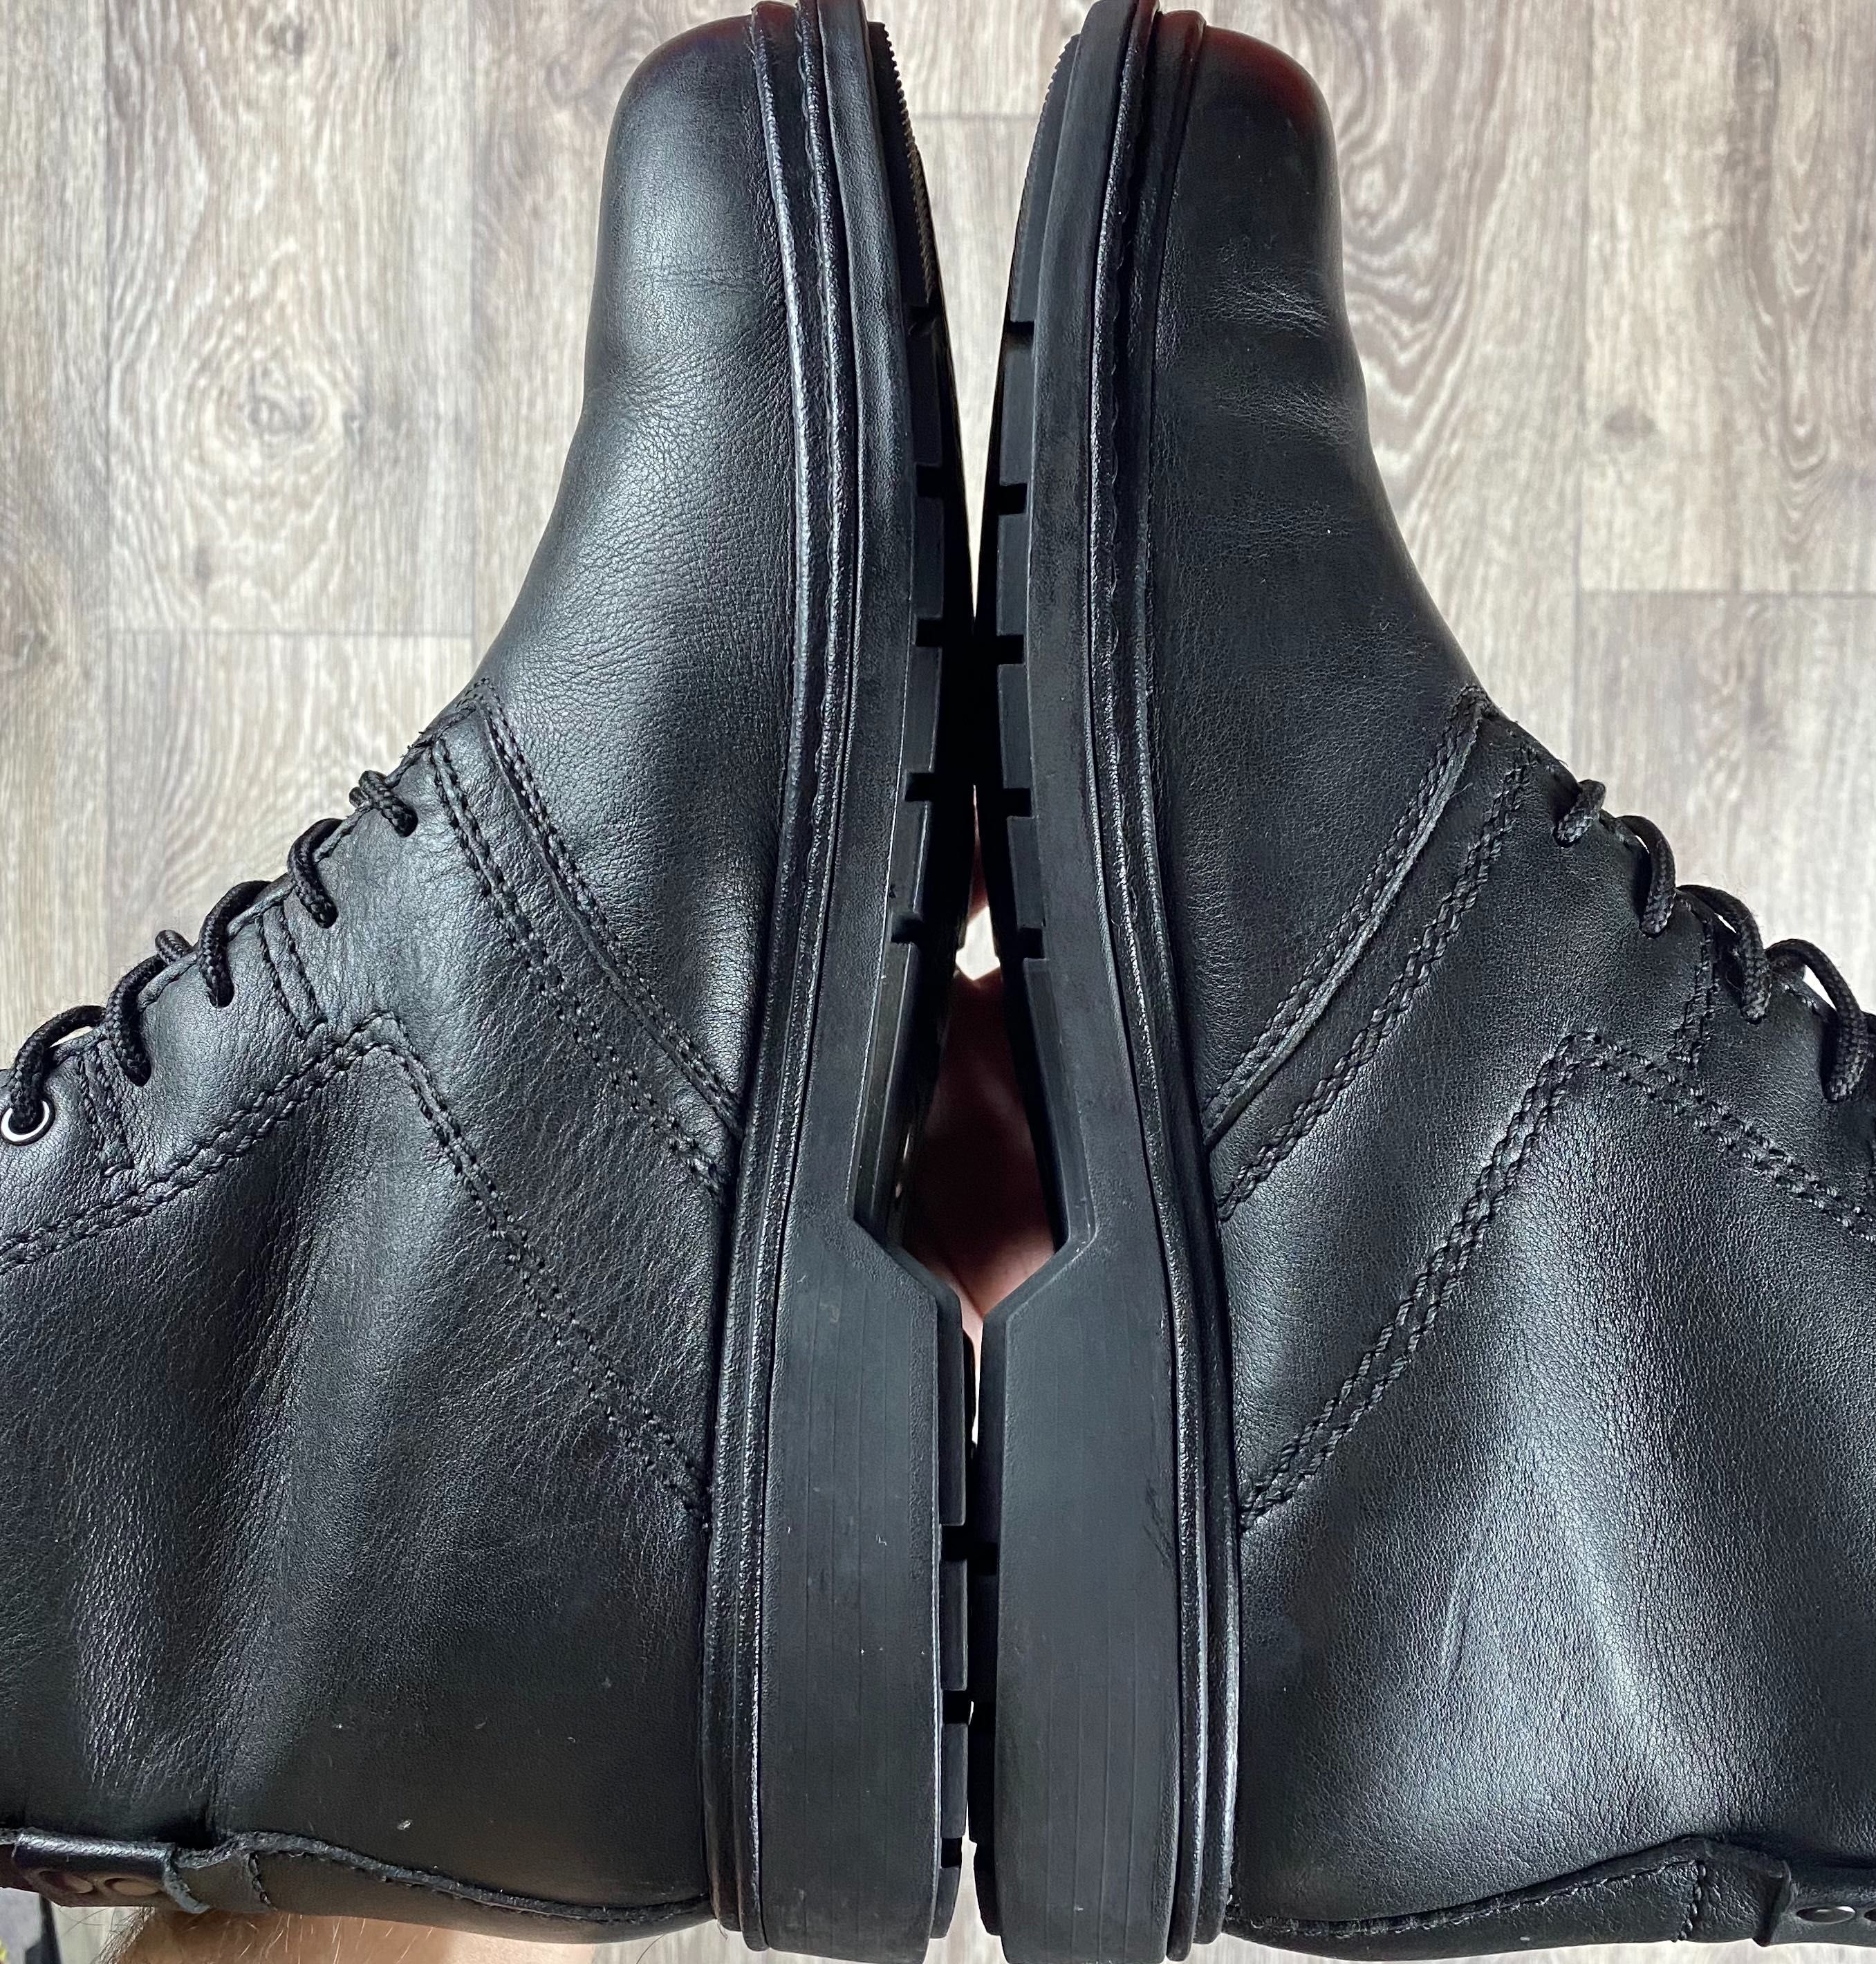 Clarks active air gore-tex ботинки 45 размер кожаные чёрные оригинал